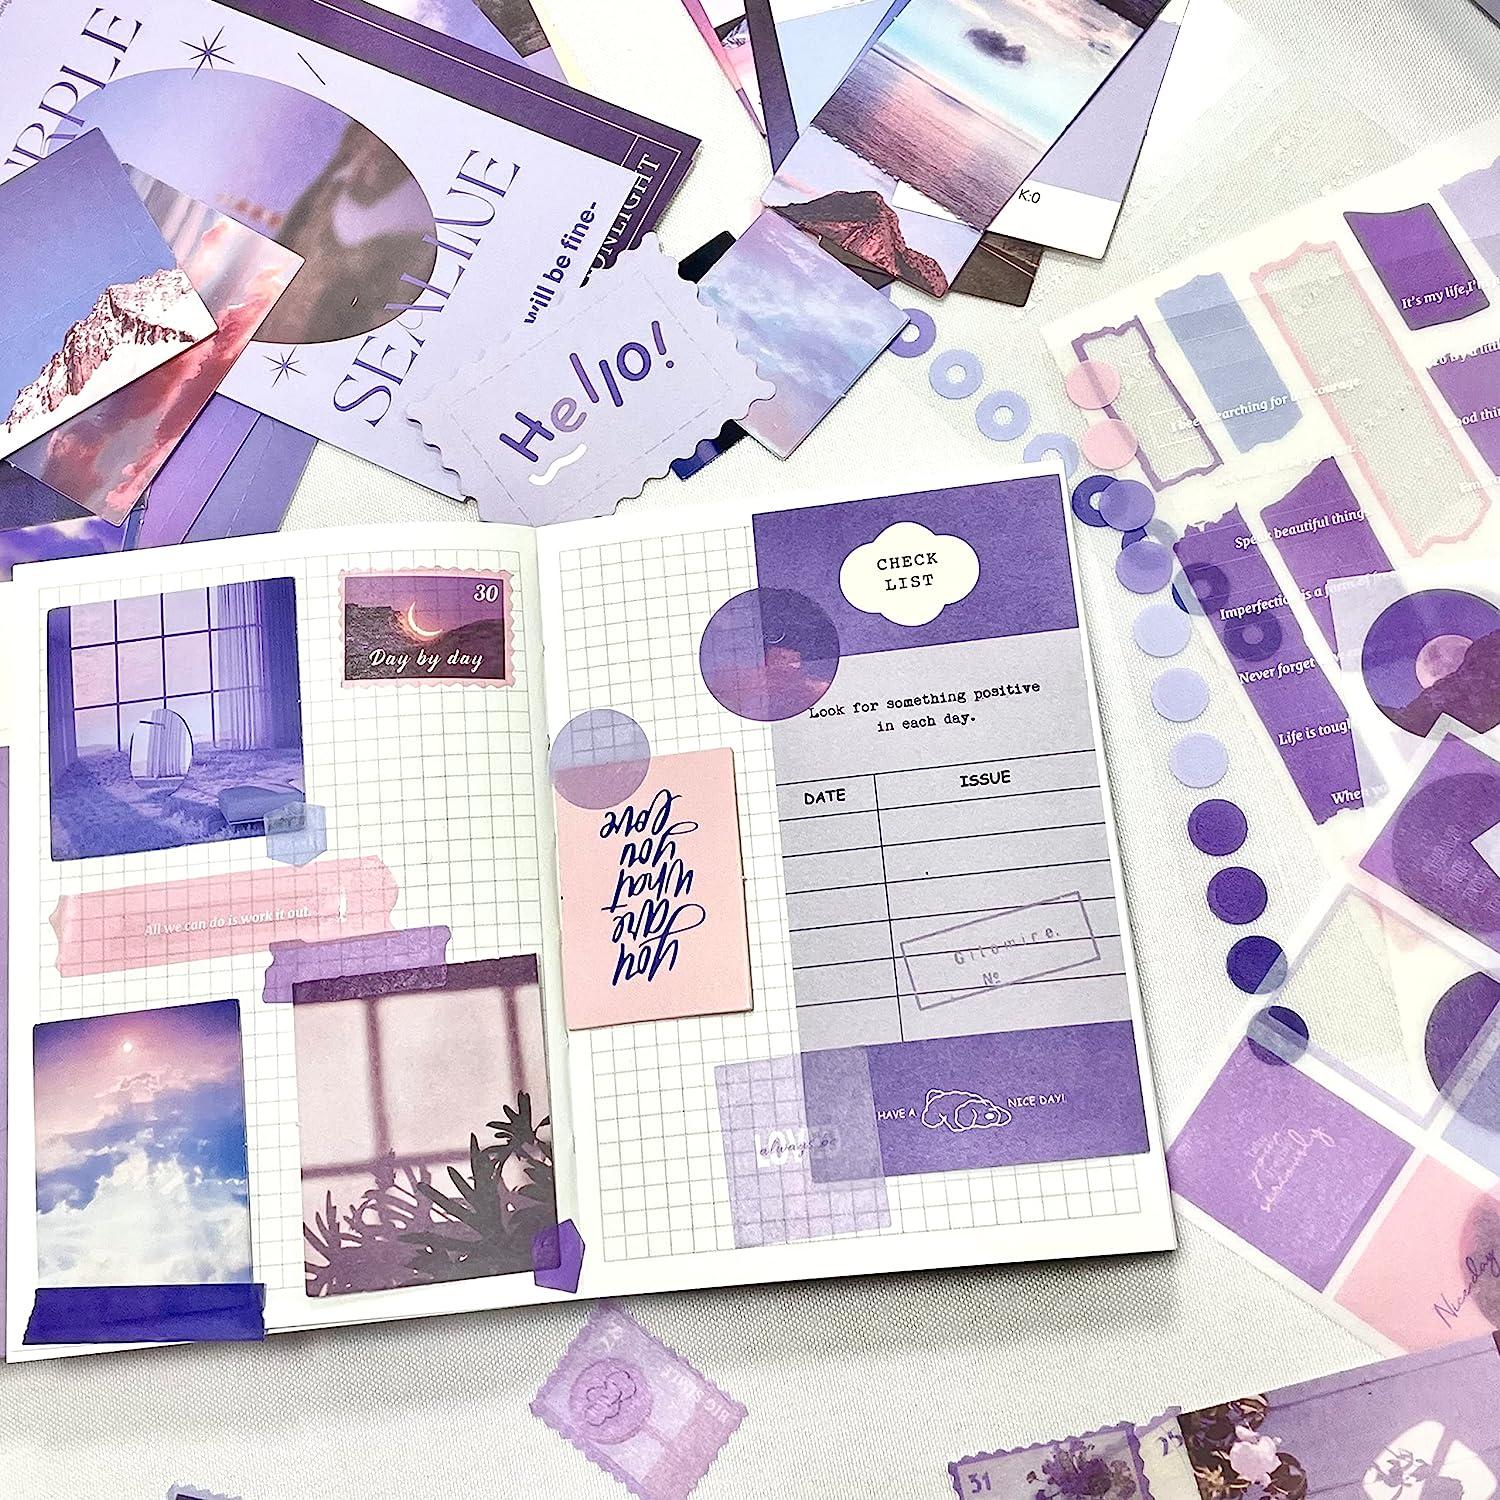 LA QUEENIE Aesthetic Scrapbook Kit,326pcs Scrapbooking Supplies Kit,Art Journaling  Supplies with Stationery,A6 Grid Notebook,Scrapbook Gift for Teen Girl  Kid(Purple) purple B